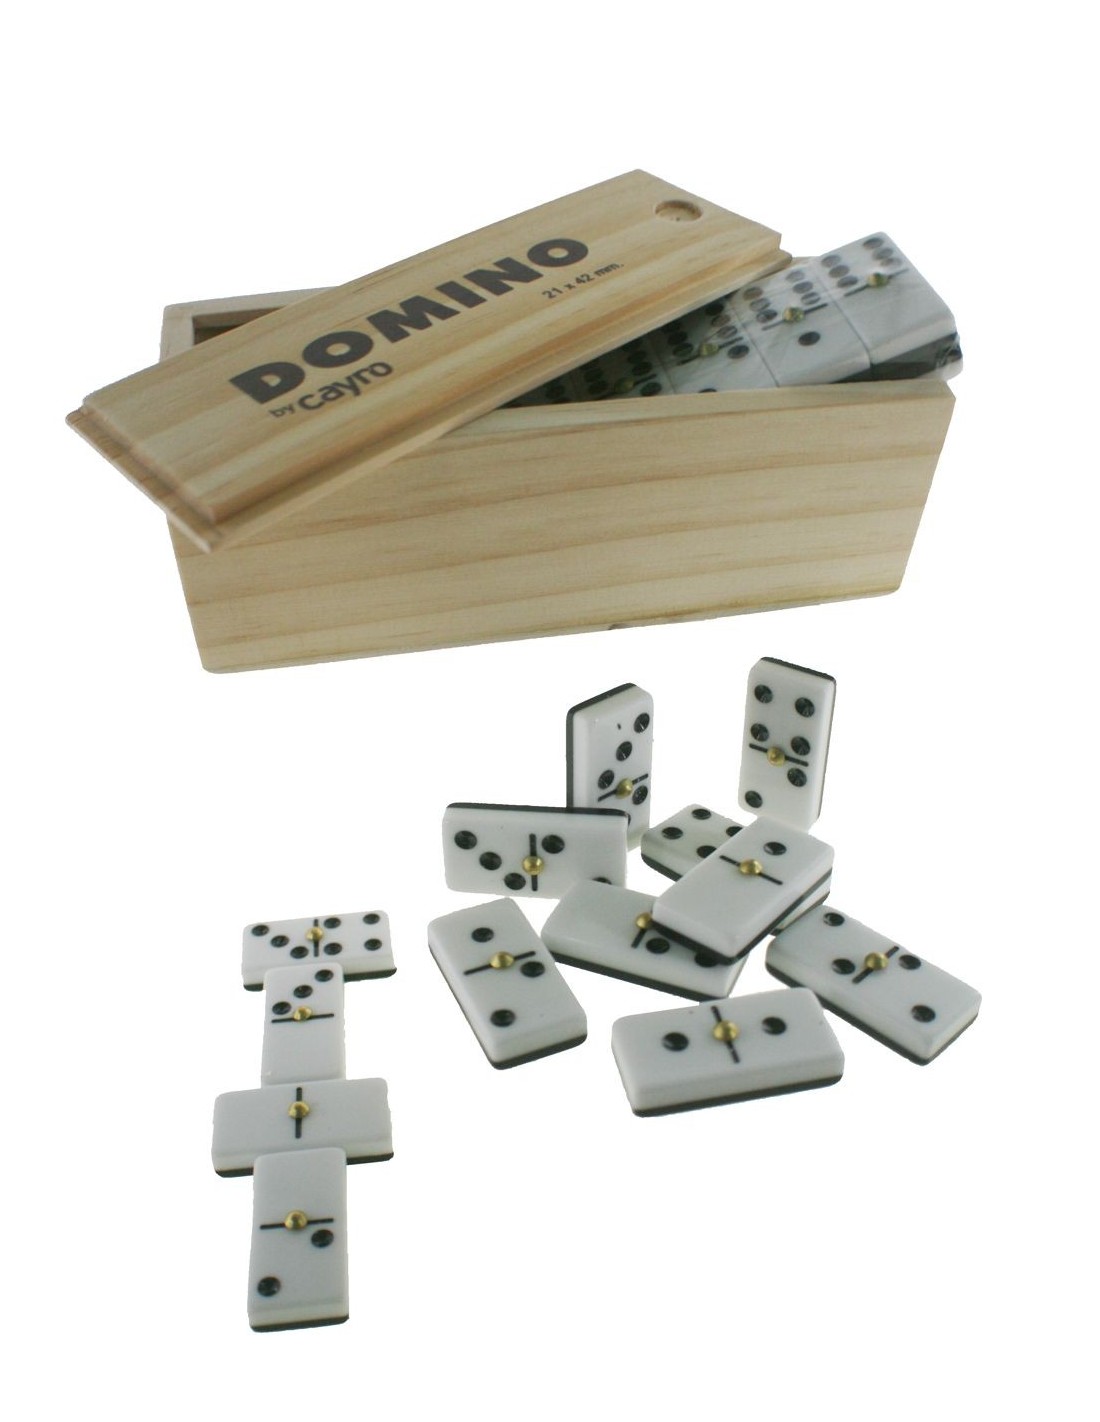 Domino - jeu de société